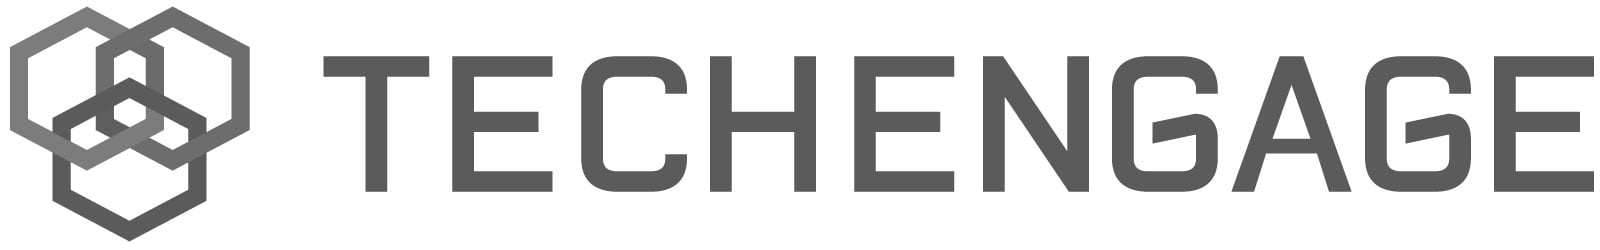 Techengage Logo 3-White Bg